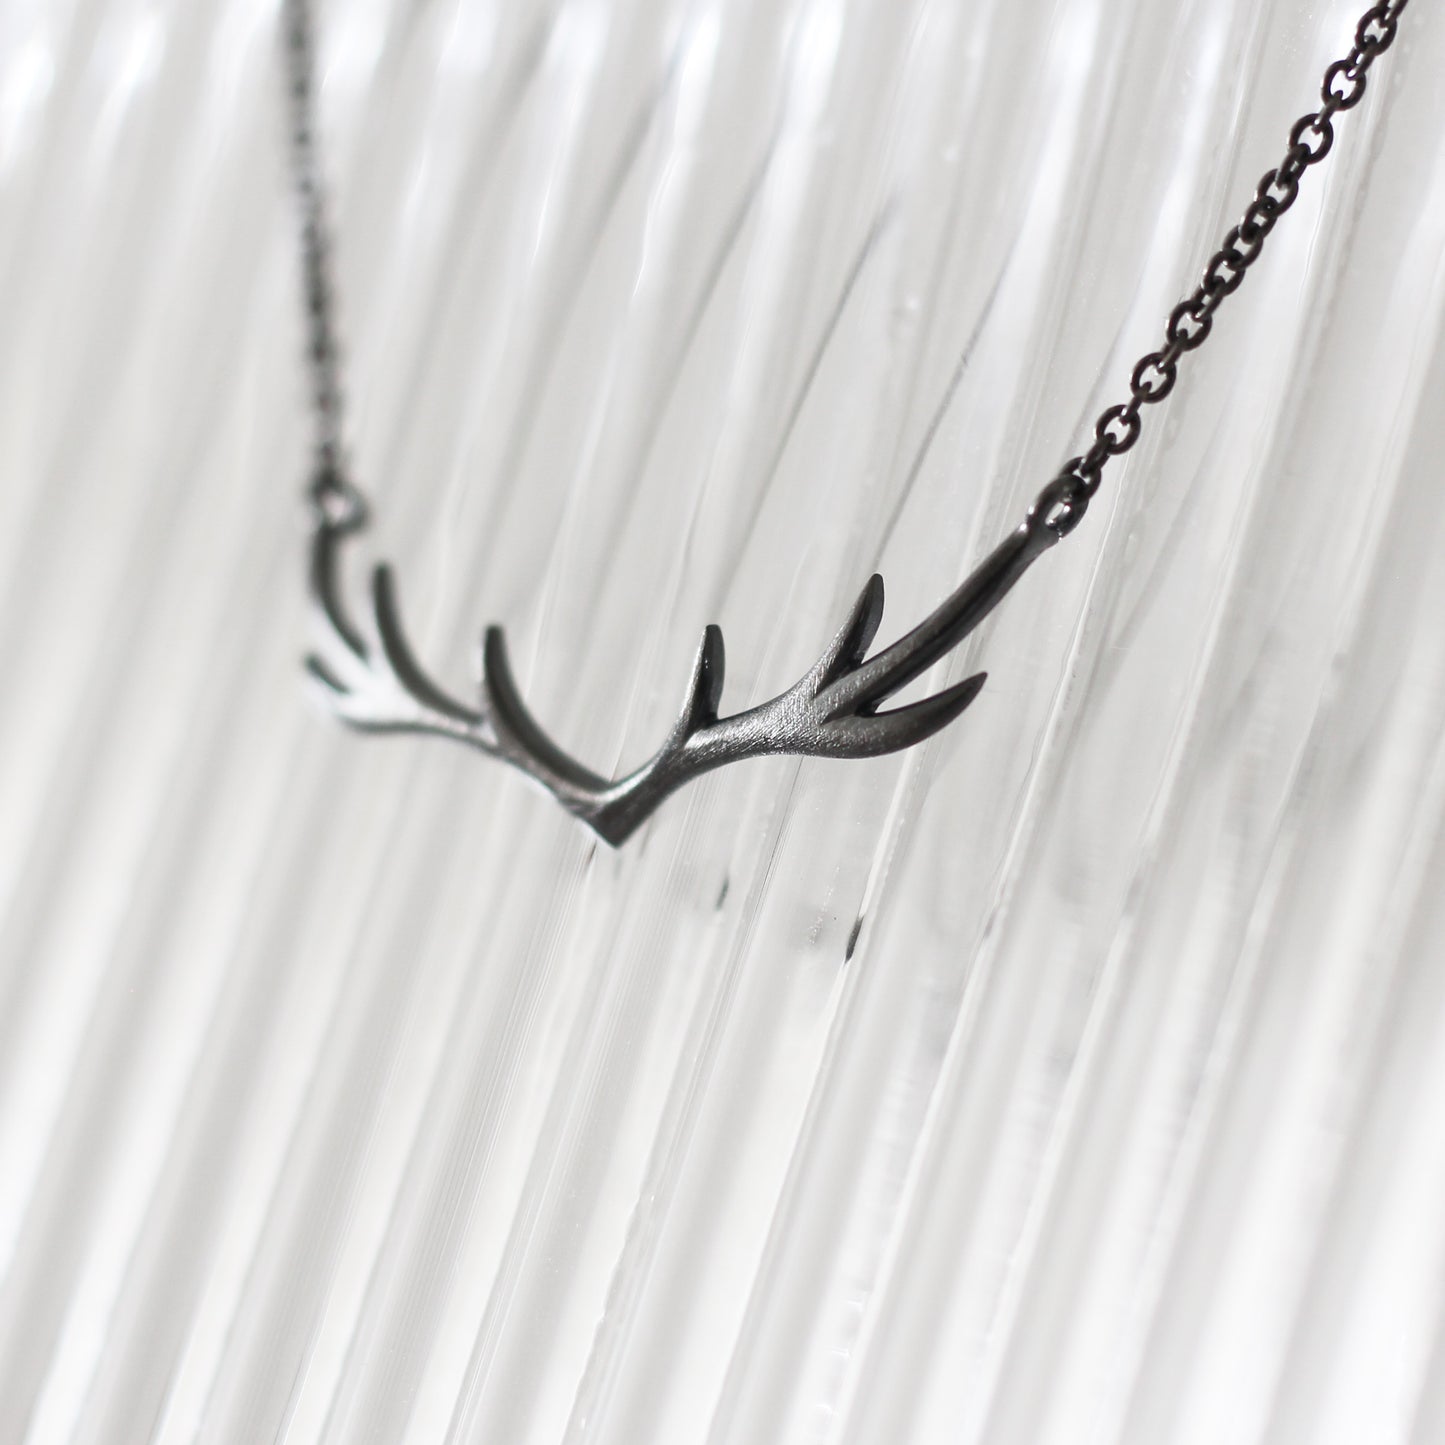 My Deer Necklace - Minimal - Oxidised Silver